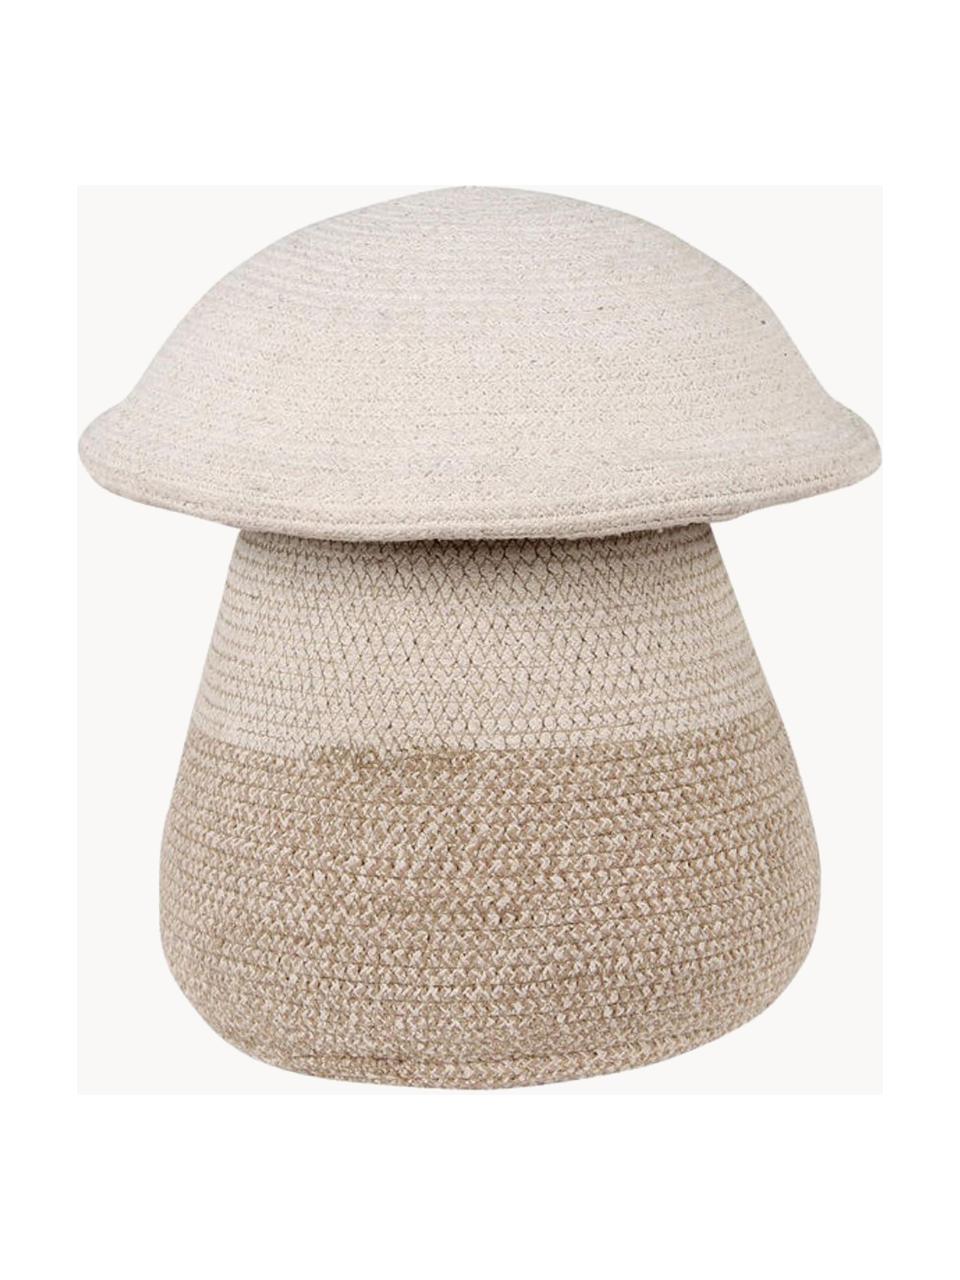 Cesta infantil artesanal Mushroom, 38 cm, 97% algodón, 3% fibra sintética, Blanco crema, tonos beige, Ø 33 x Al 38 cm